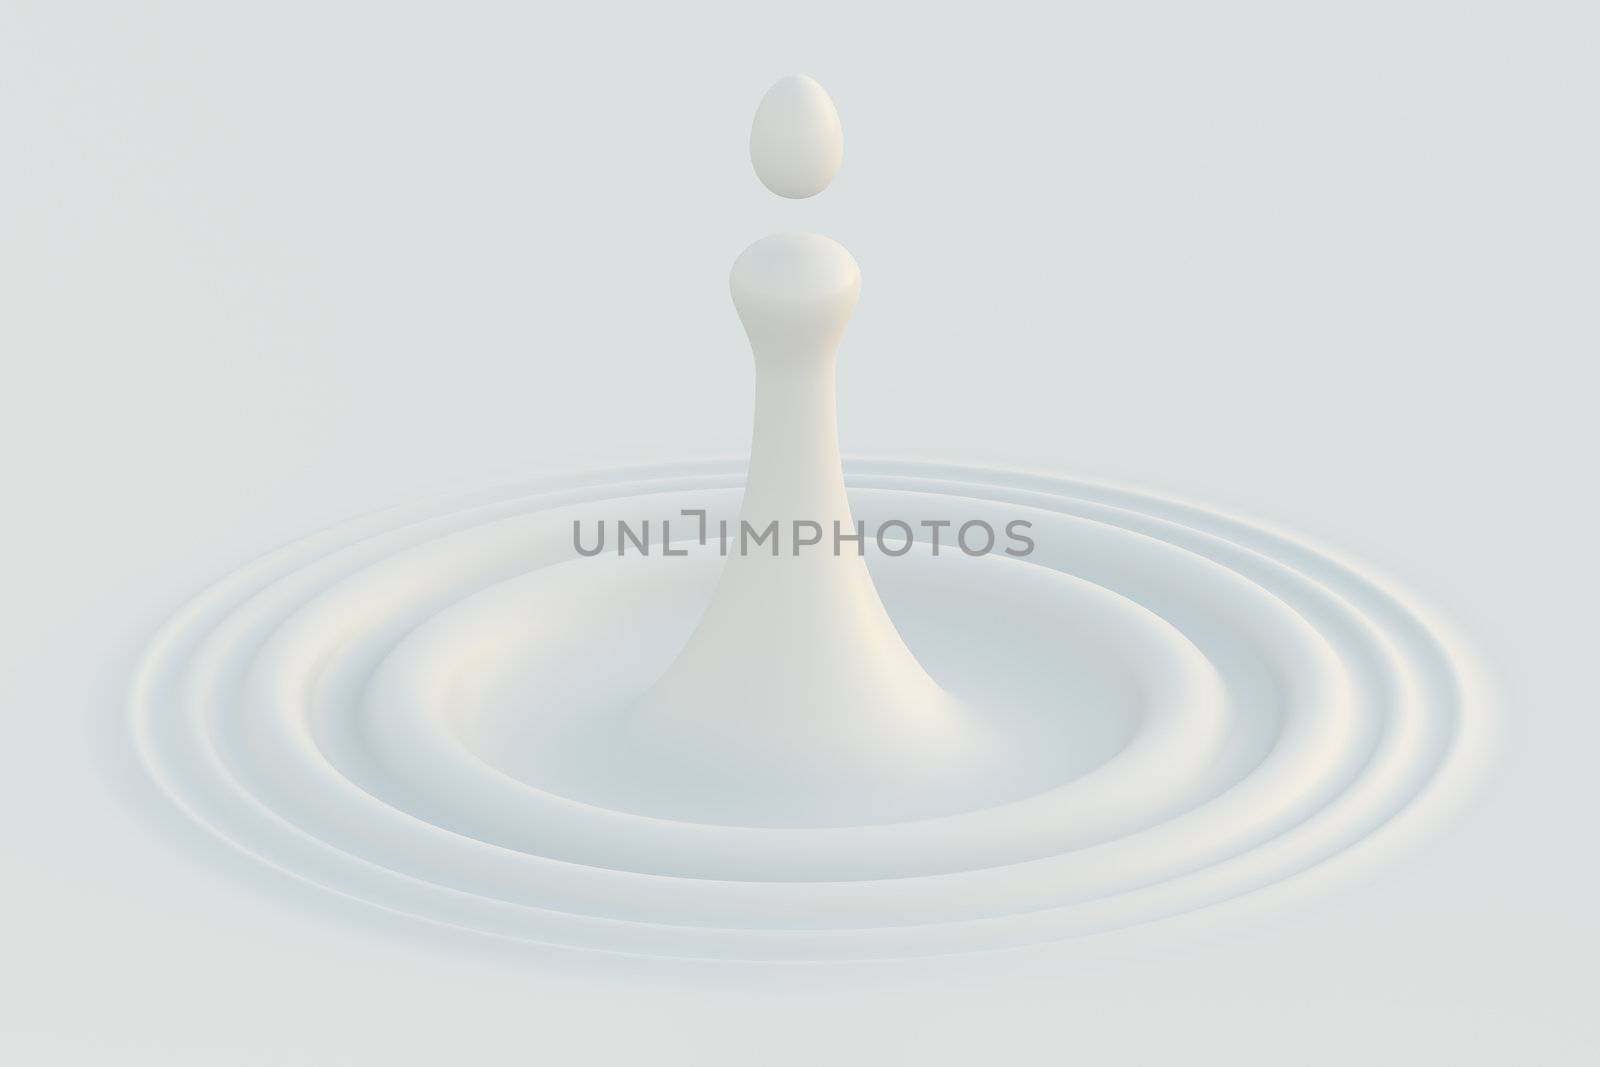 3d Illustration of Milk Drop